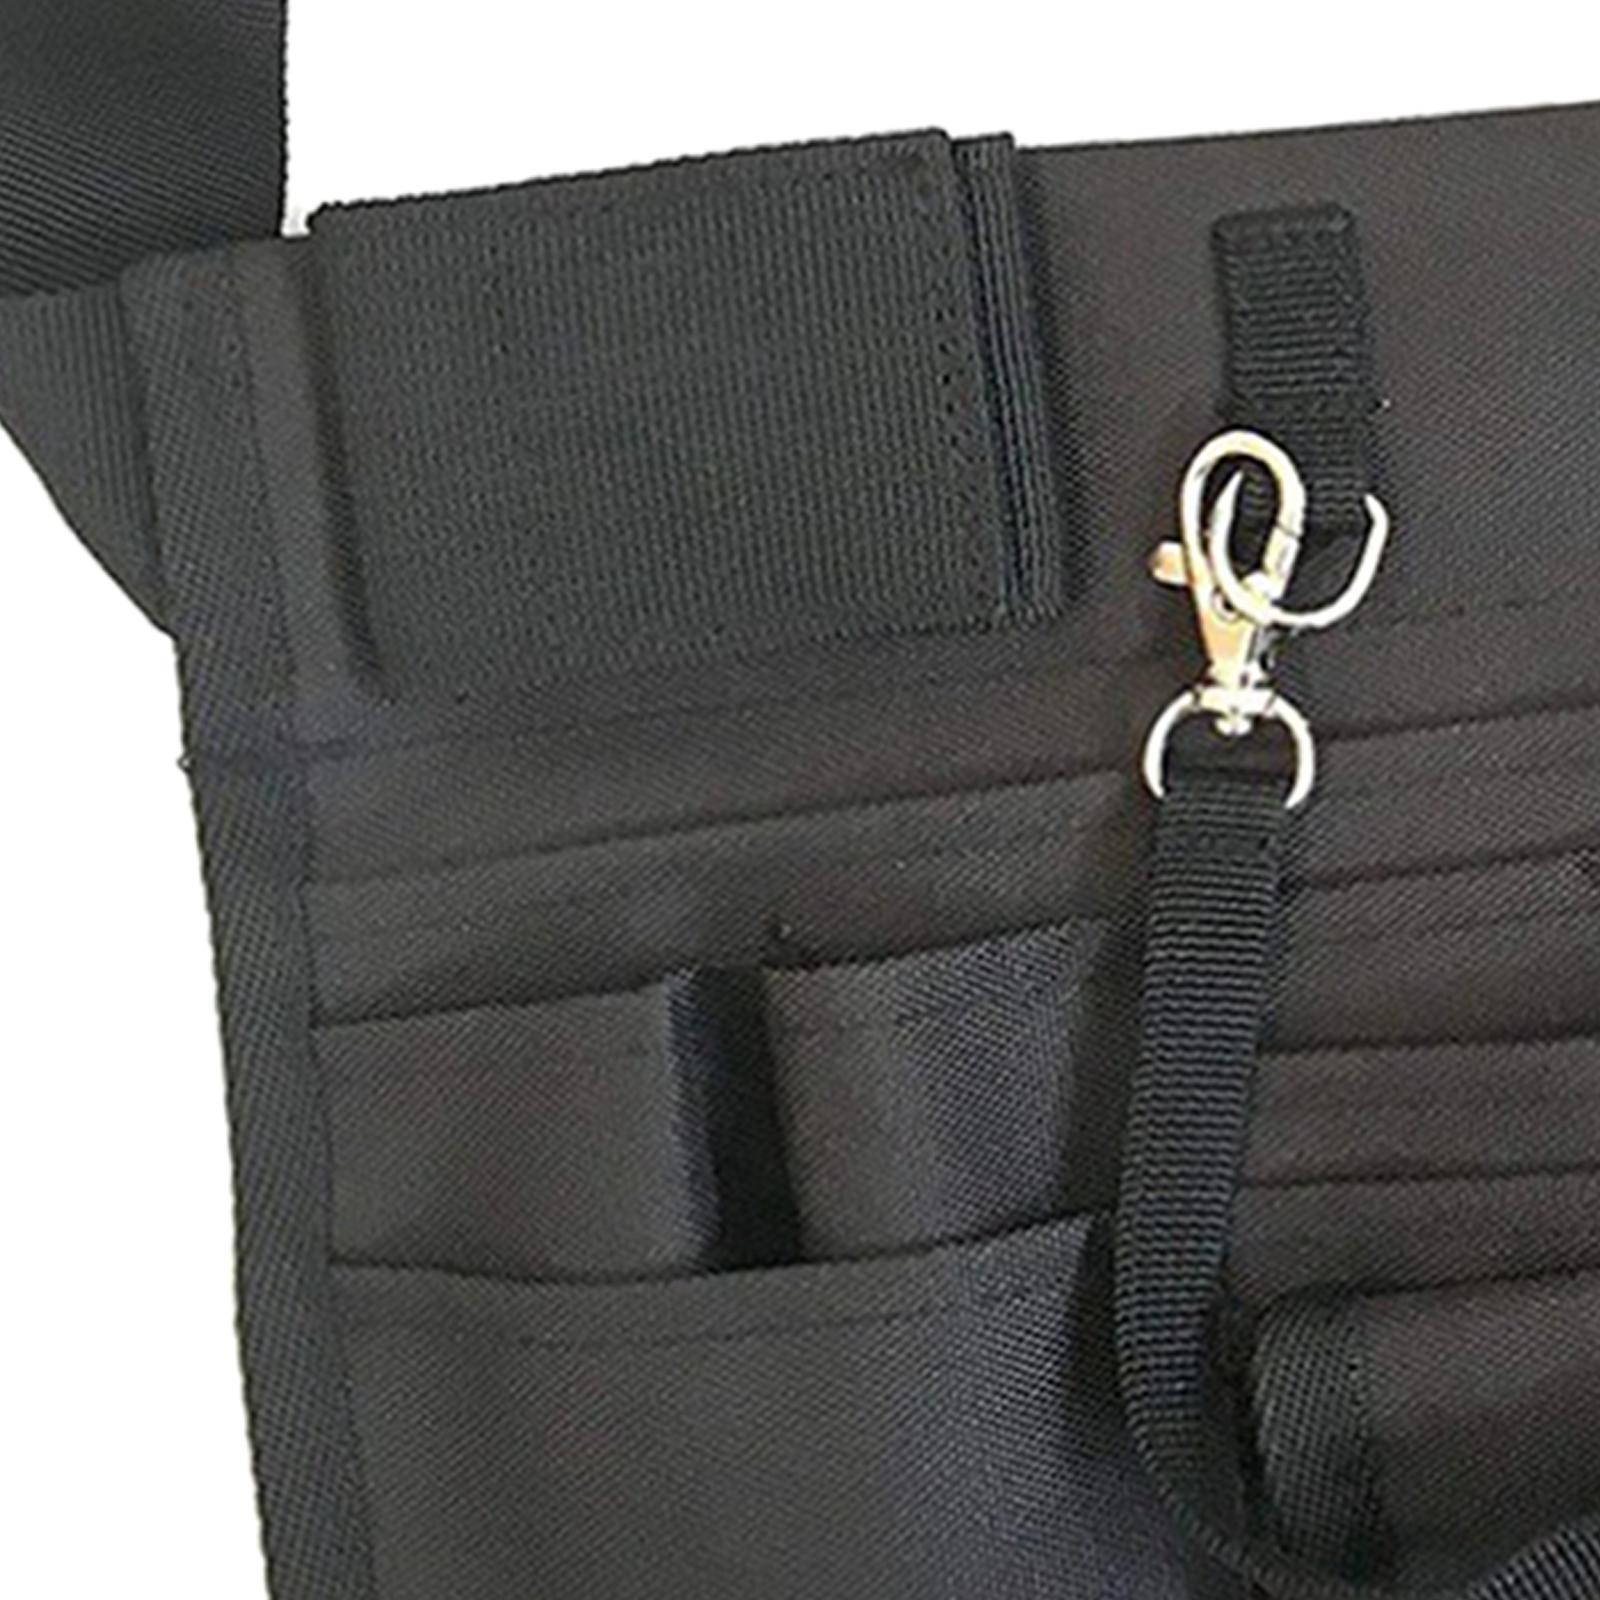 Portable Nurse Organizer Belt, Waist Bag, Extra Pocket, Tape Holder Nurse Fanny Pack